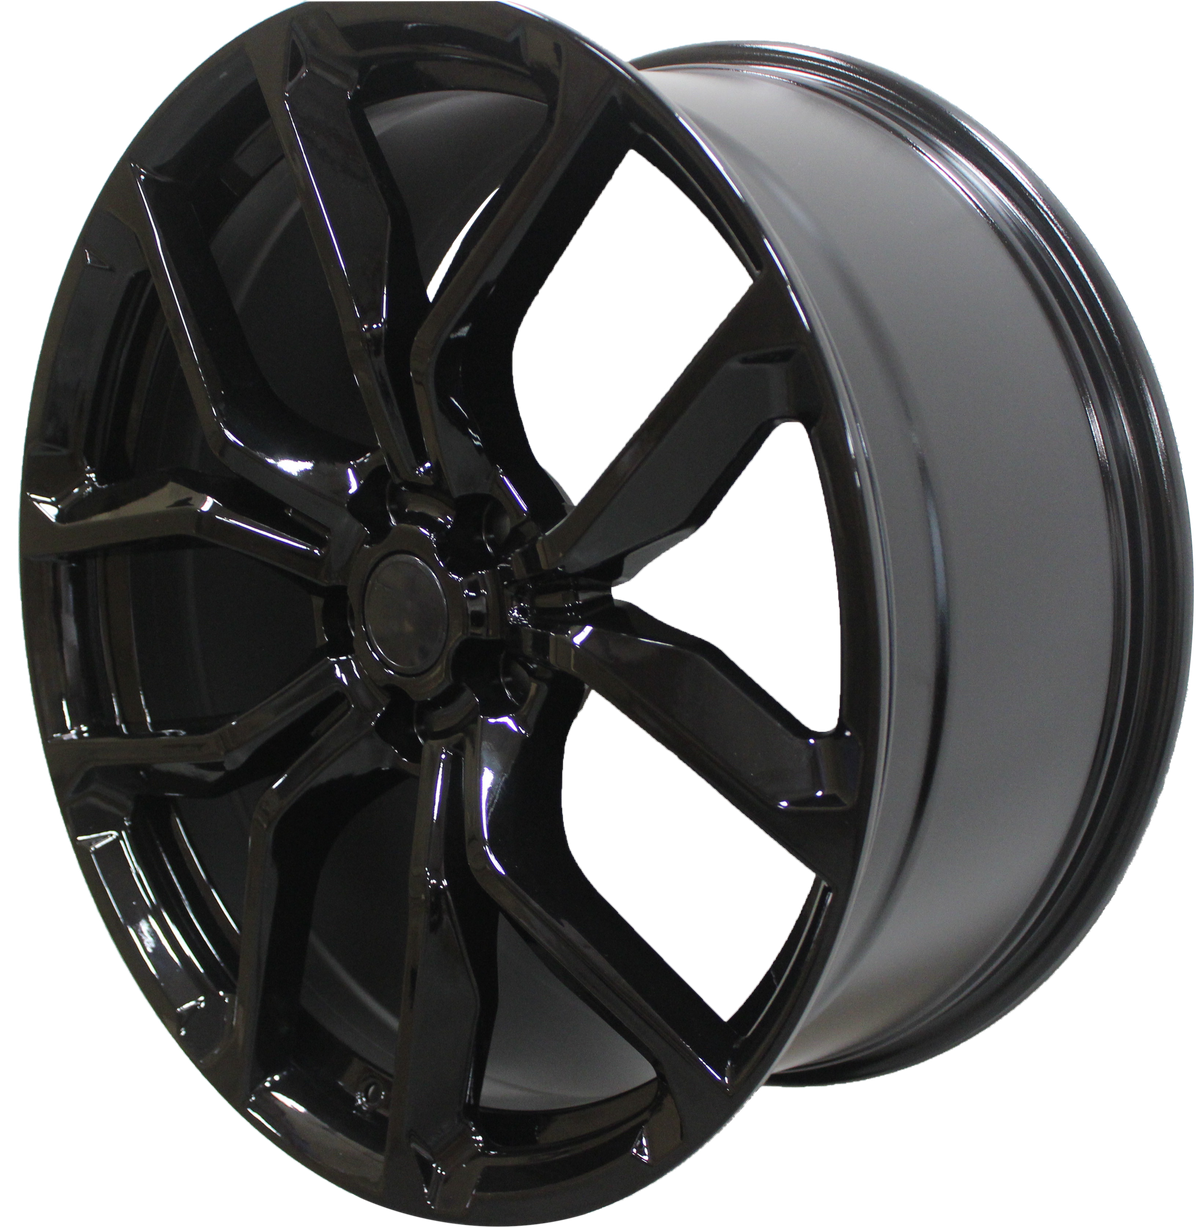 24 Inch Rims fit Range Rover Sport / Full Size HSE SVR Style Gloss Black Wheels